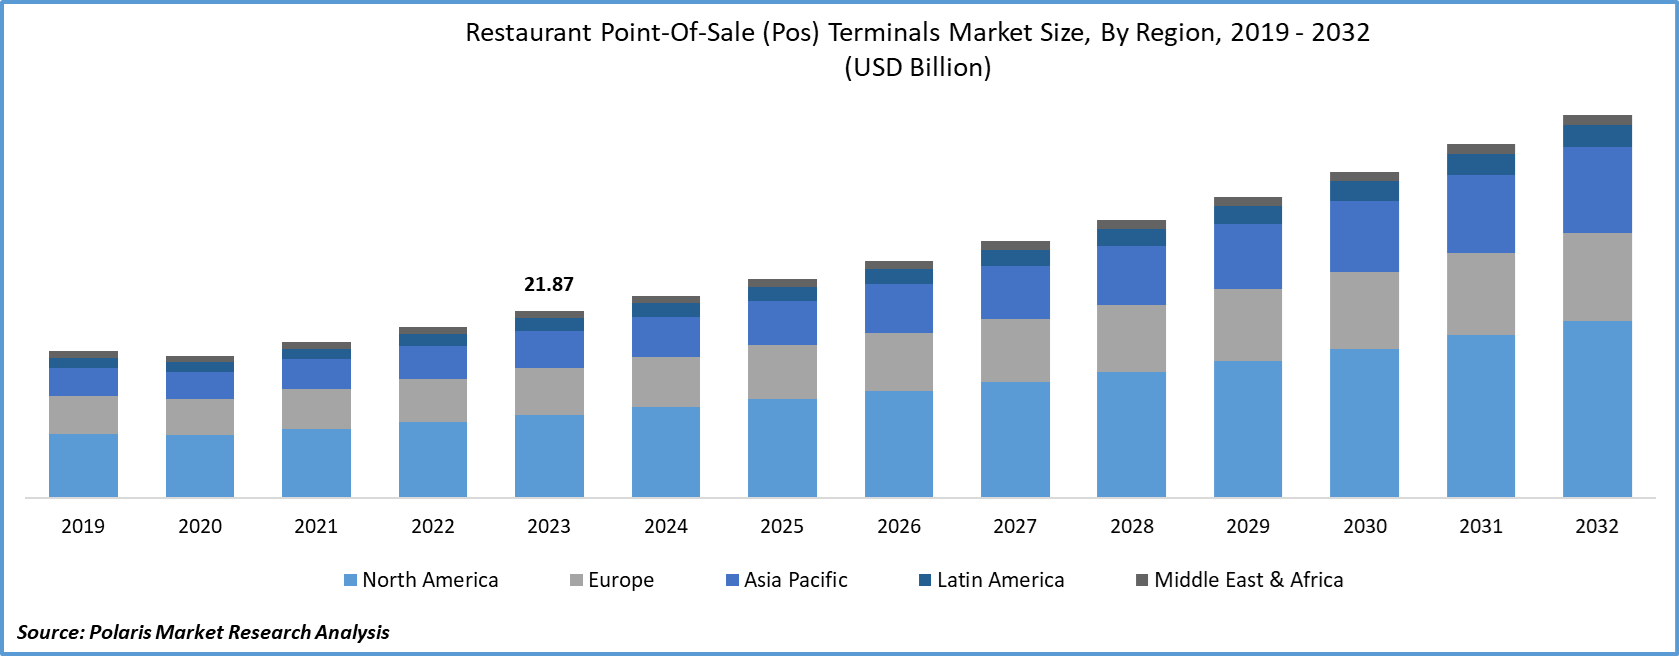 Restaurant Point-of-Sale (POS) Terminals Market size